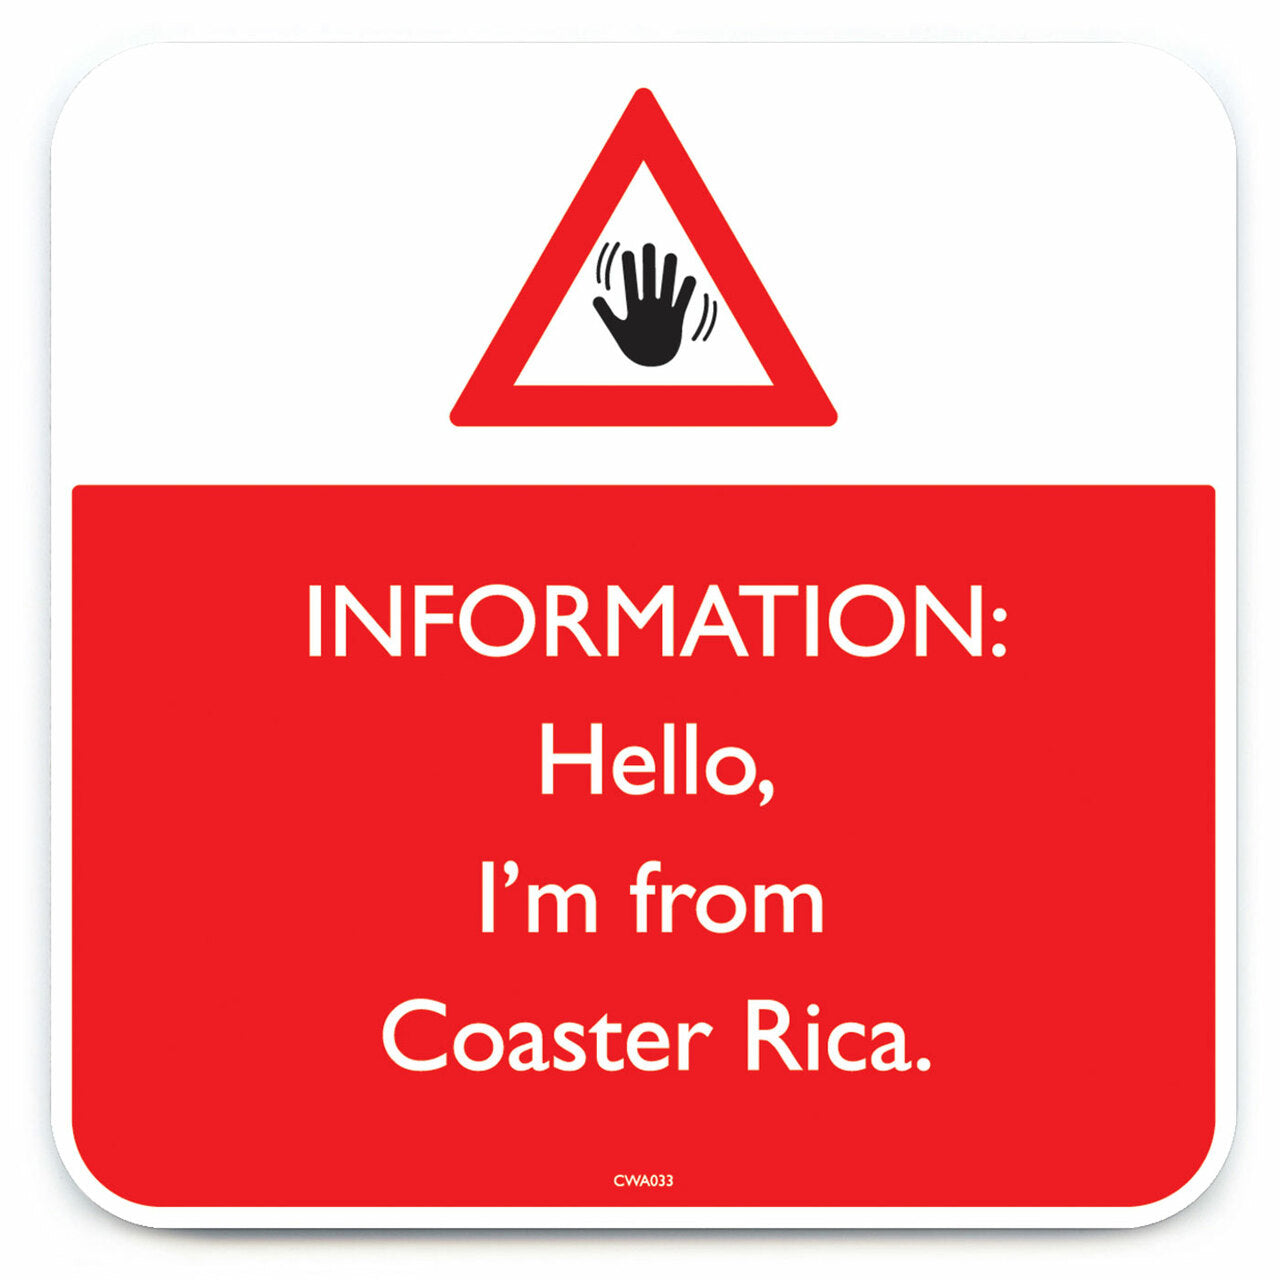 Coaster Rica Coaster